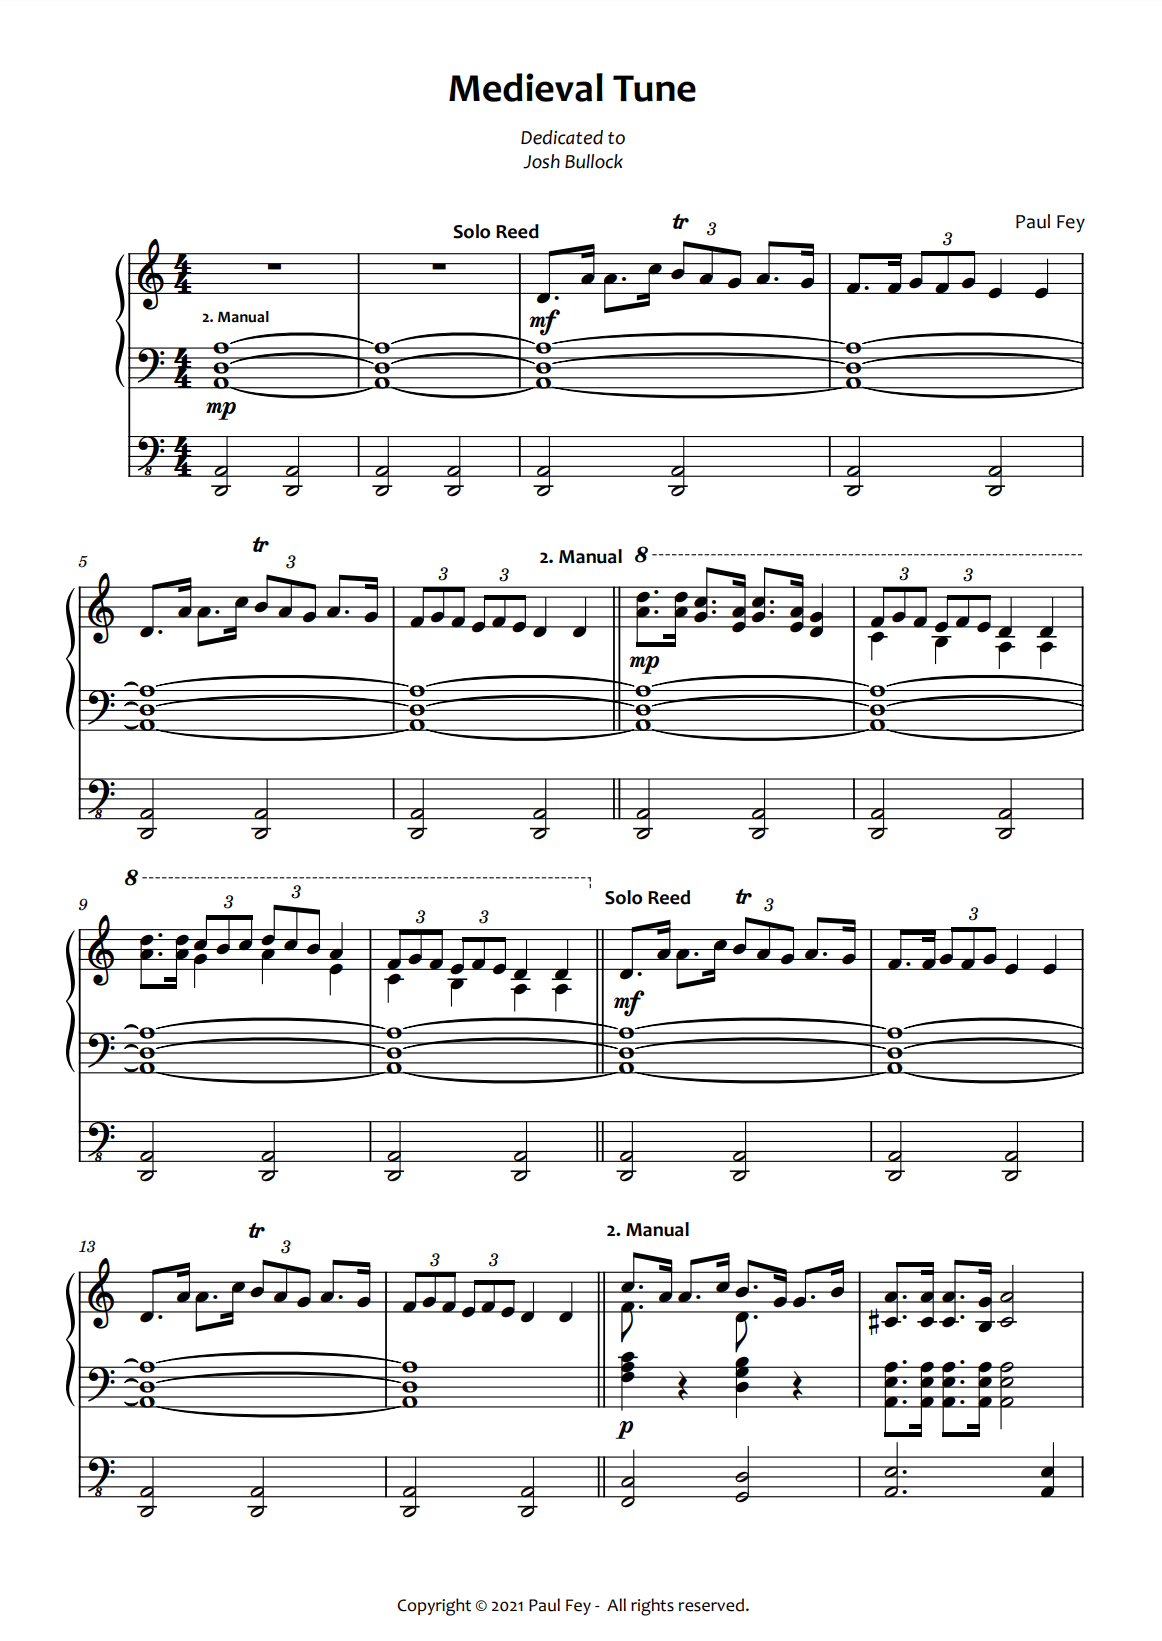 Medival Tune for Organ (Sheet Music) - Pipe Organ Music by Paul Fey